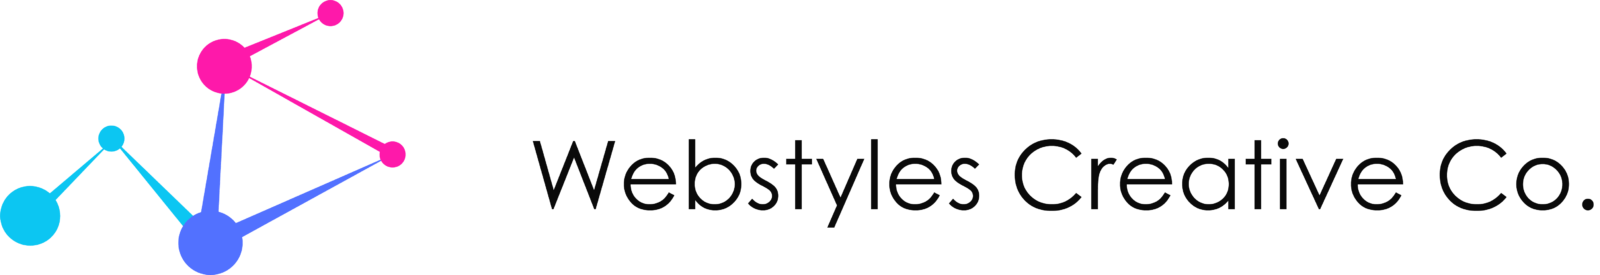 Web styles cc logo